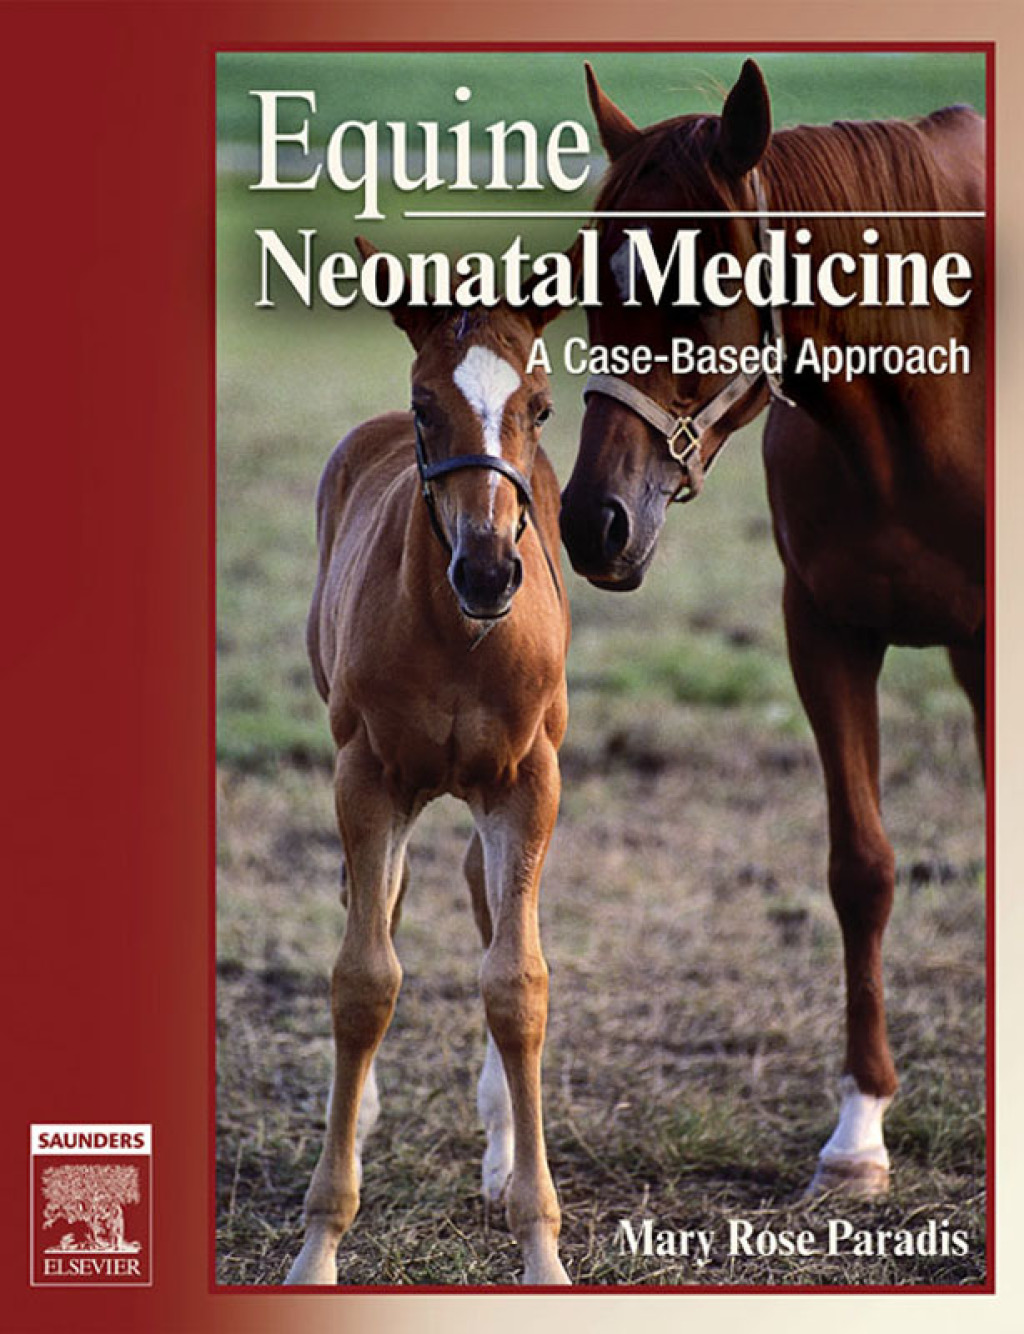 Equine Neonatal Medicine (eBook Rental) - Mary Rose Paradis,